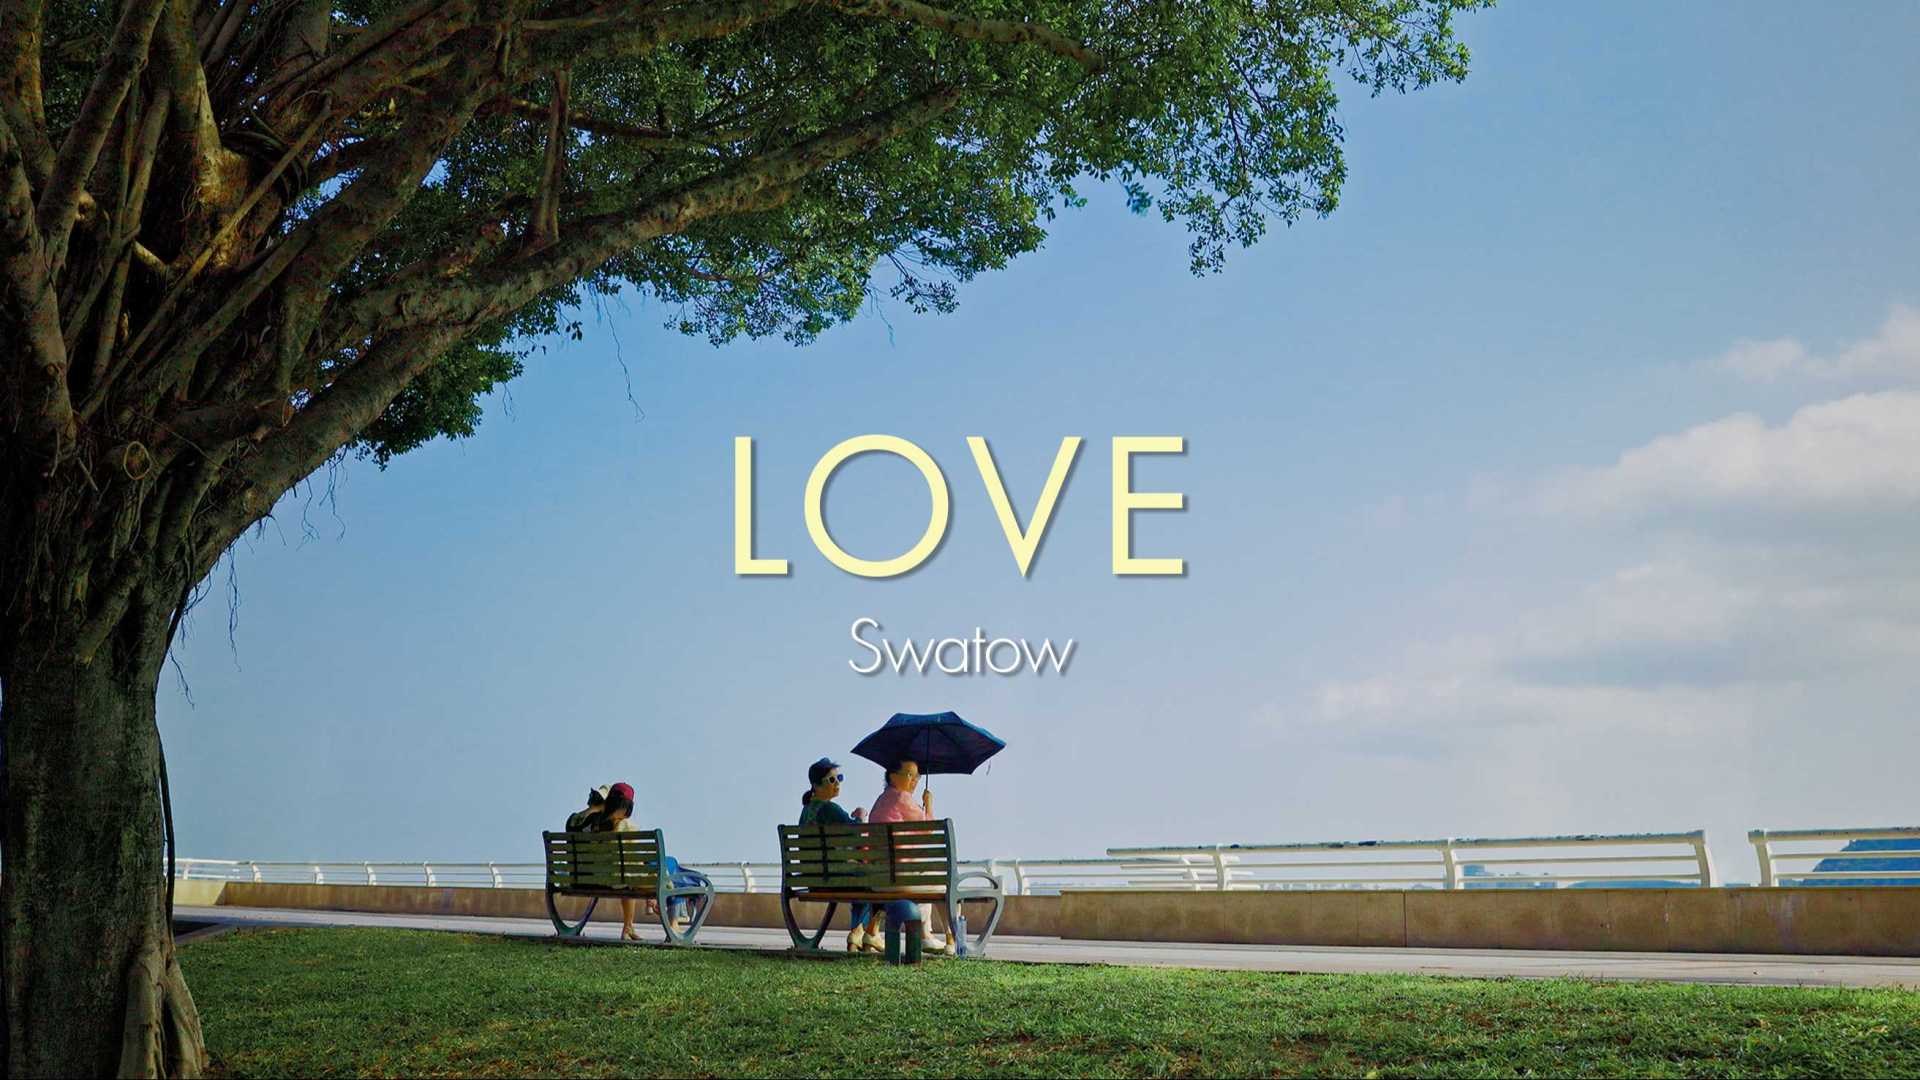 《爱在汕头》LOVE in Swatow 文艺创意短片 (4K)